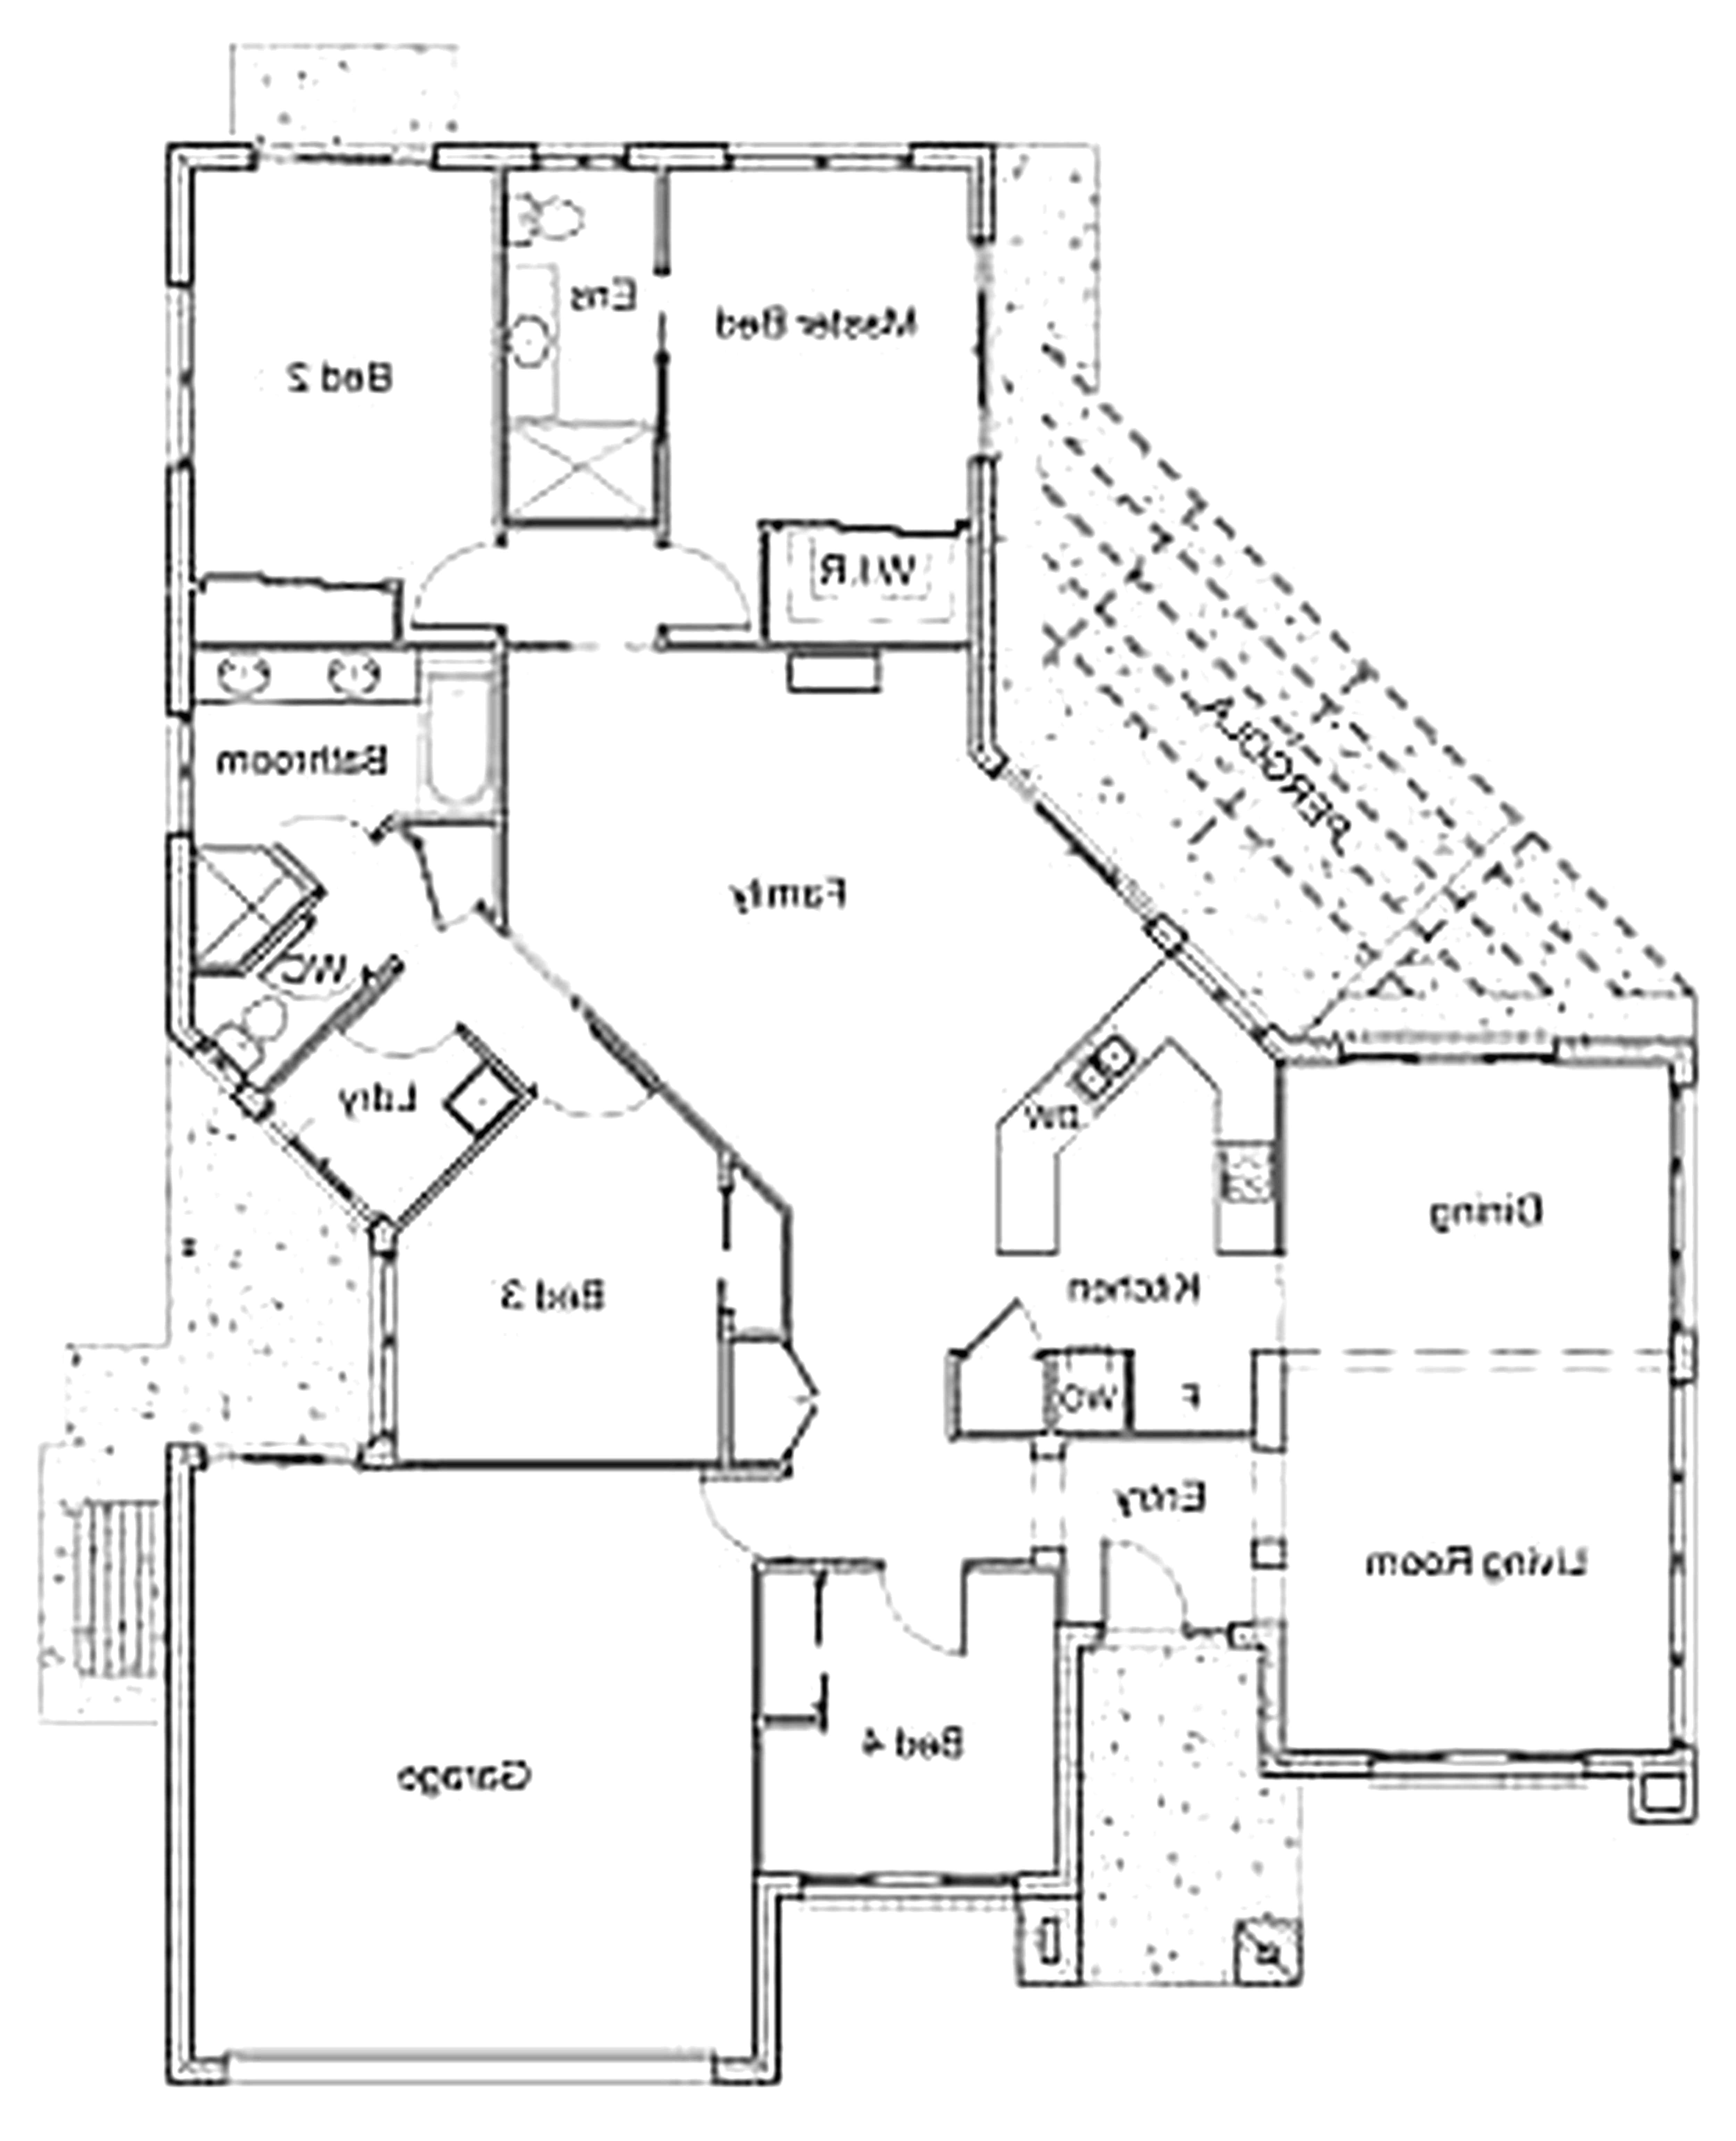 cool floor plans fresh cool house plans best cool house blueprints coolhouse plans 0d